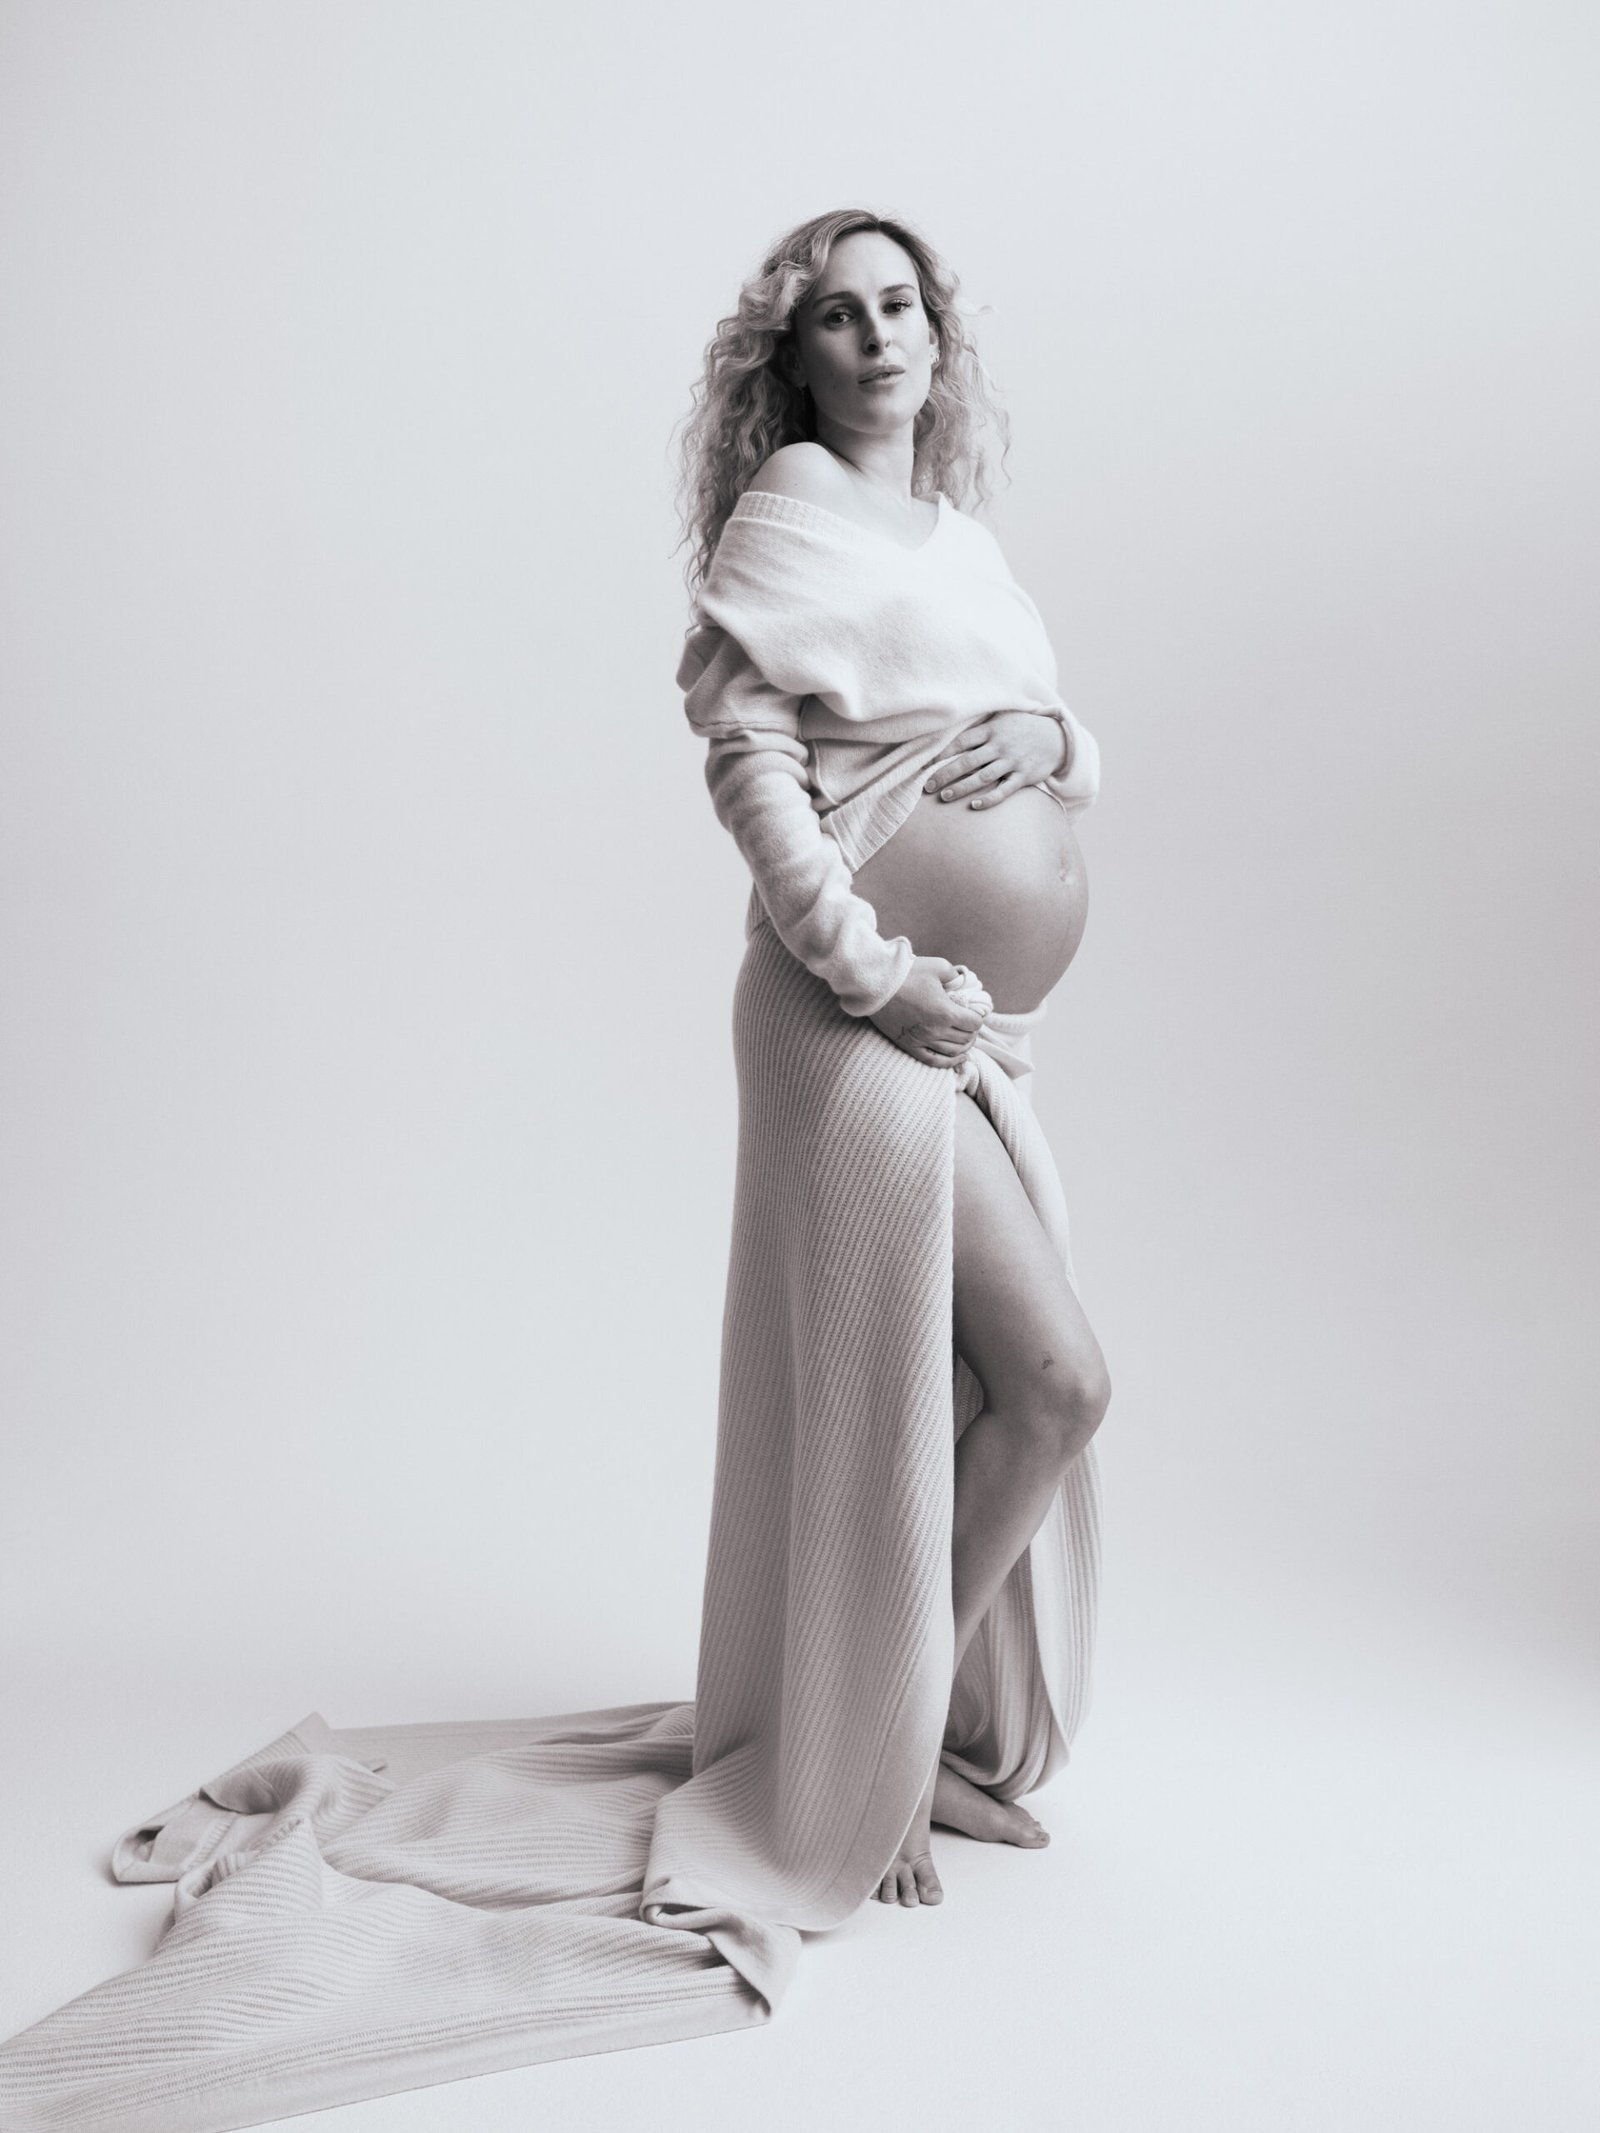 Pregnant Rumer Willis poses nude for Bare Cashmere campaign